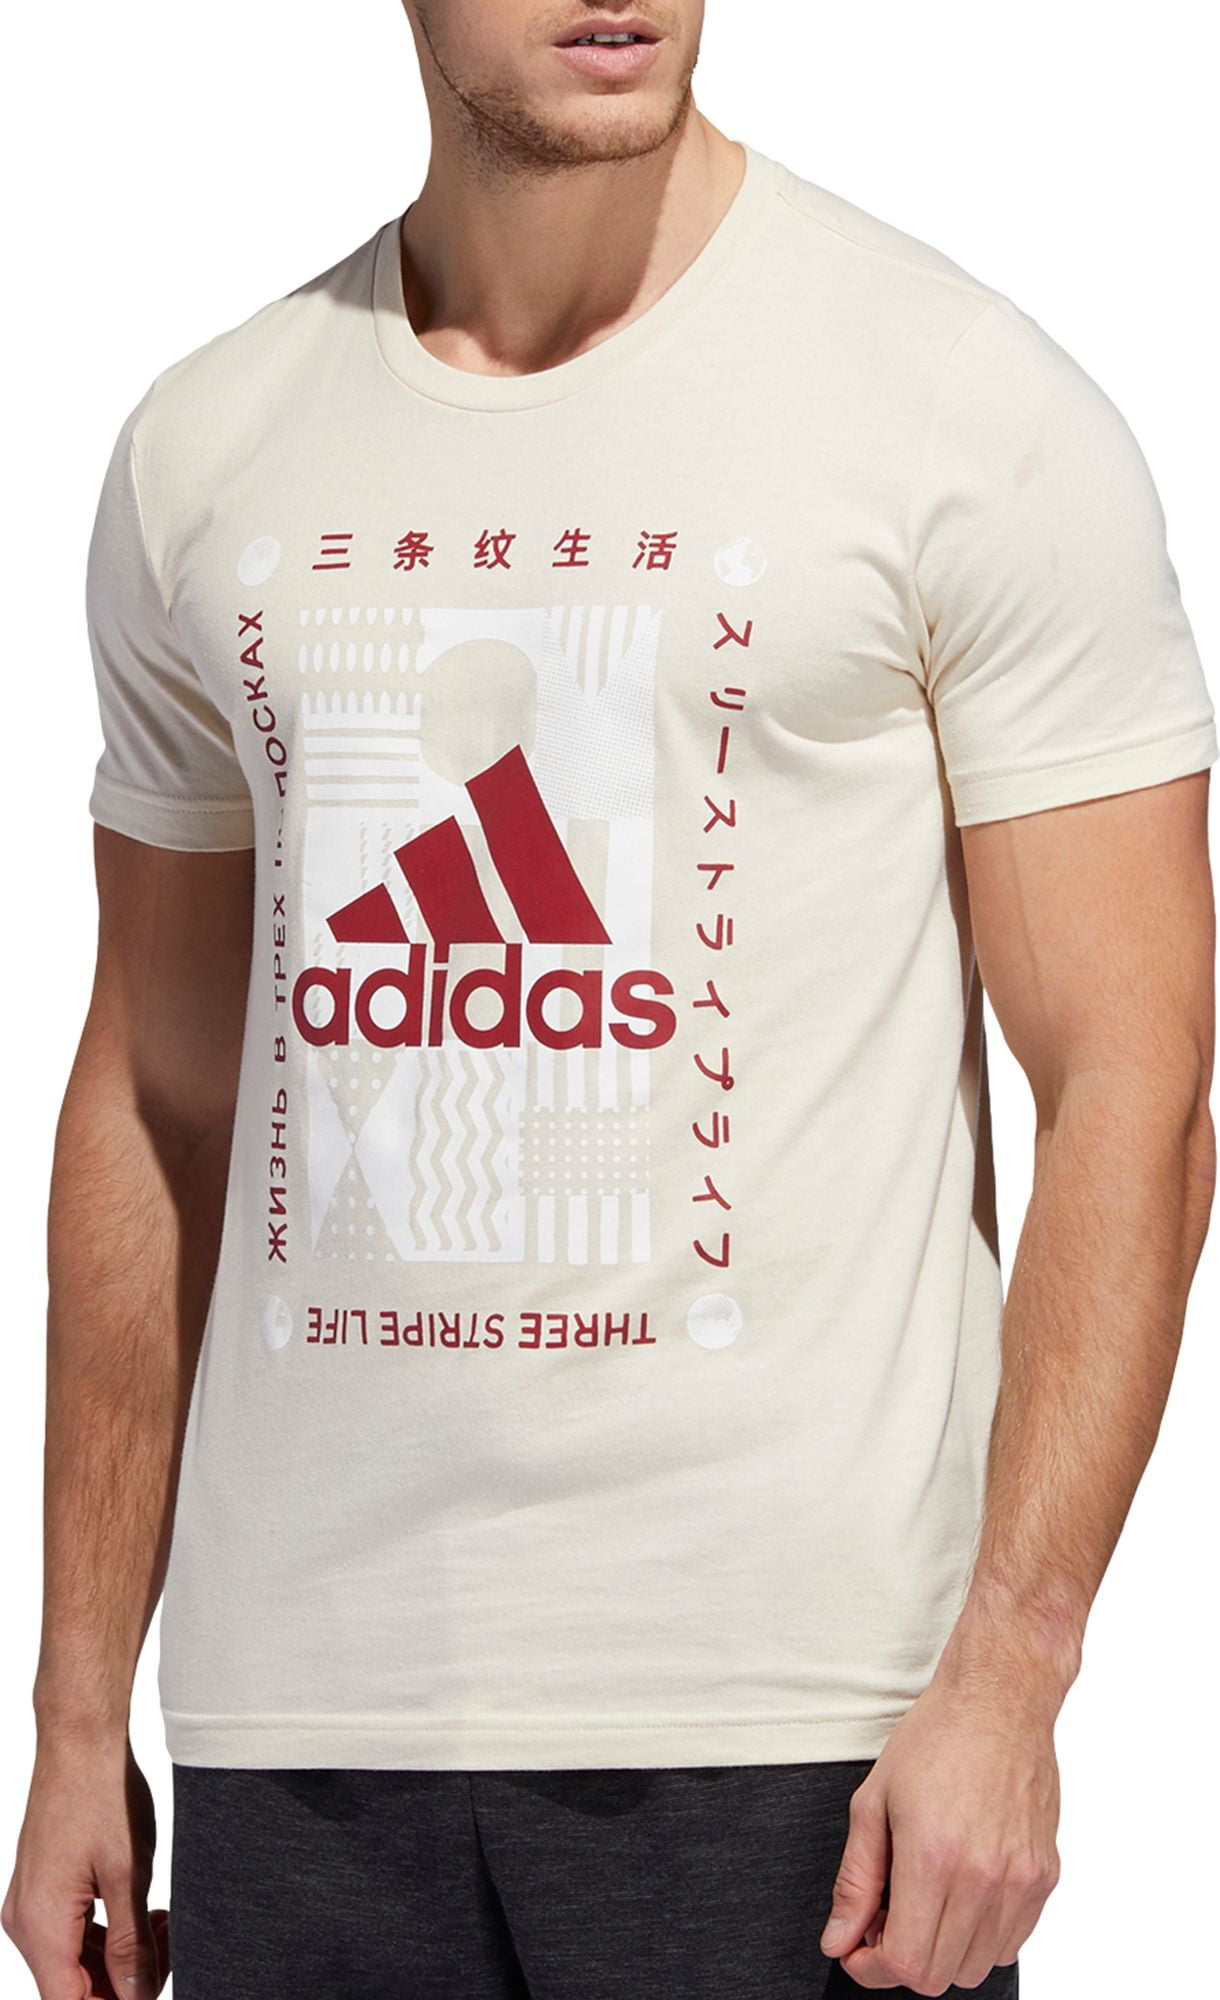 adidas international t shirt